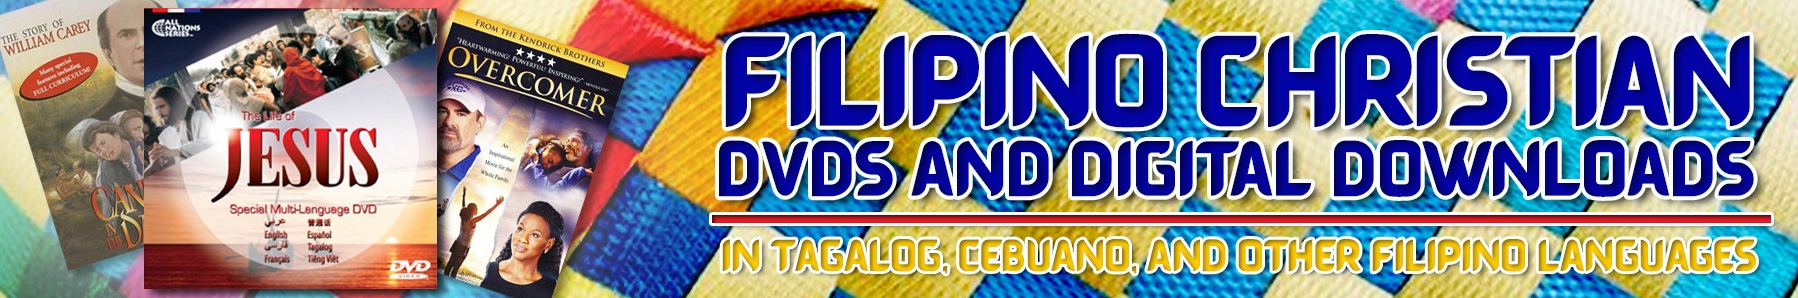 Filipino Christian Dvds and Digital Downloads